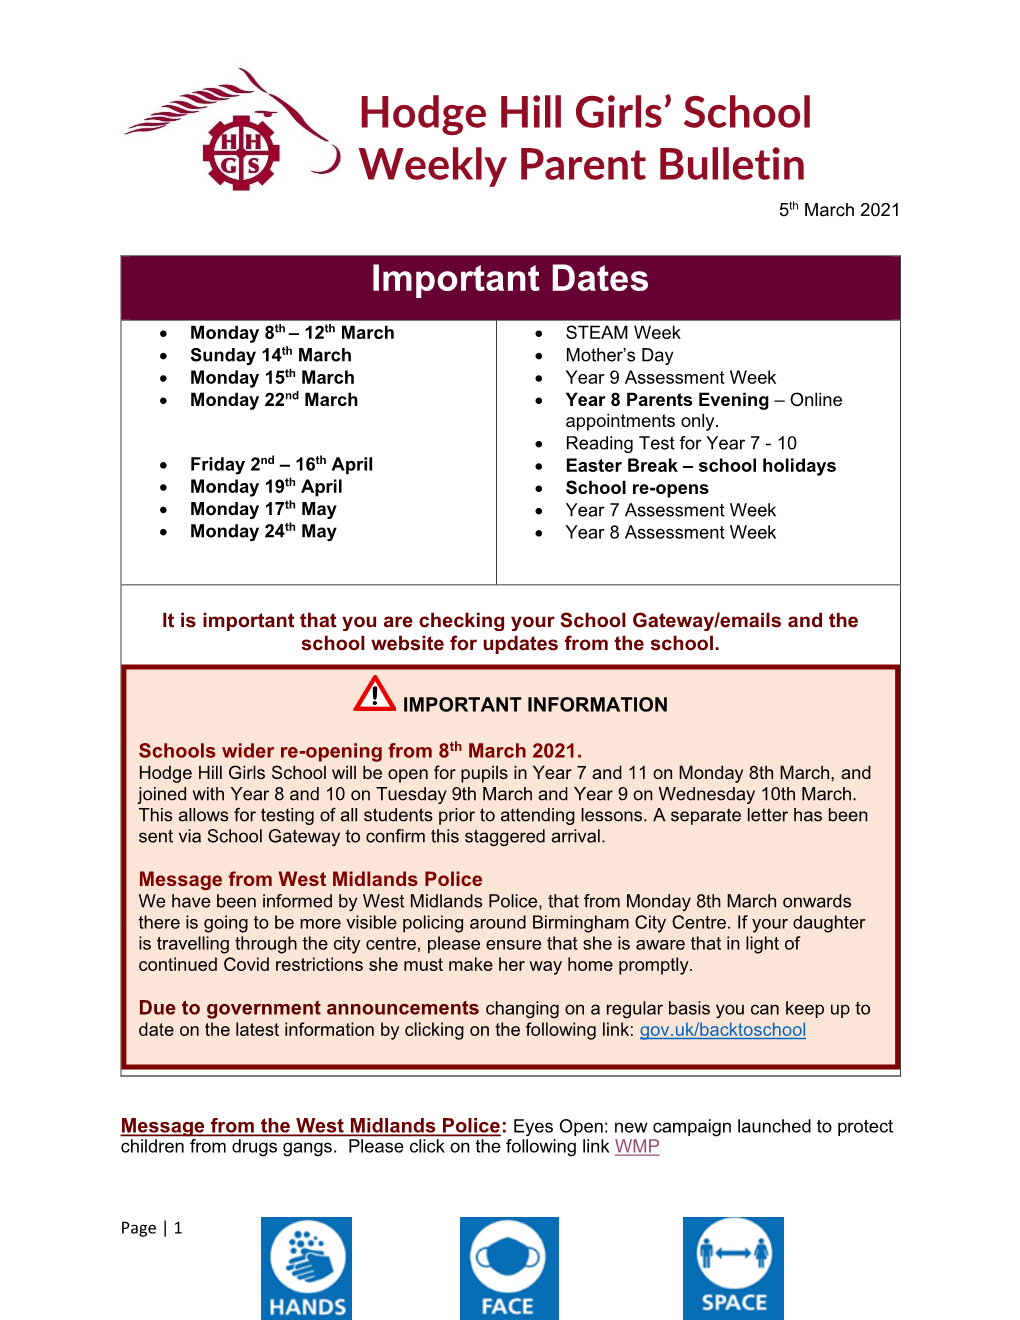 Hodge Hill Girls' School Weekly Parent Bulletin